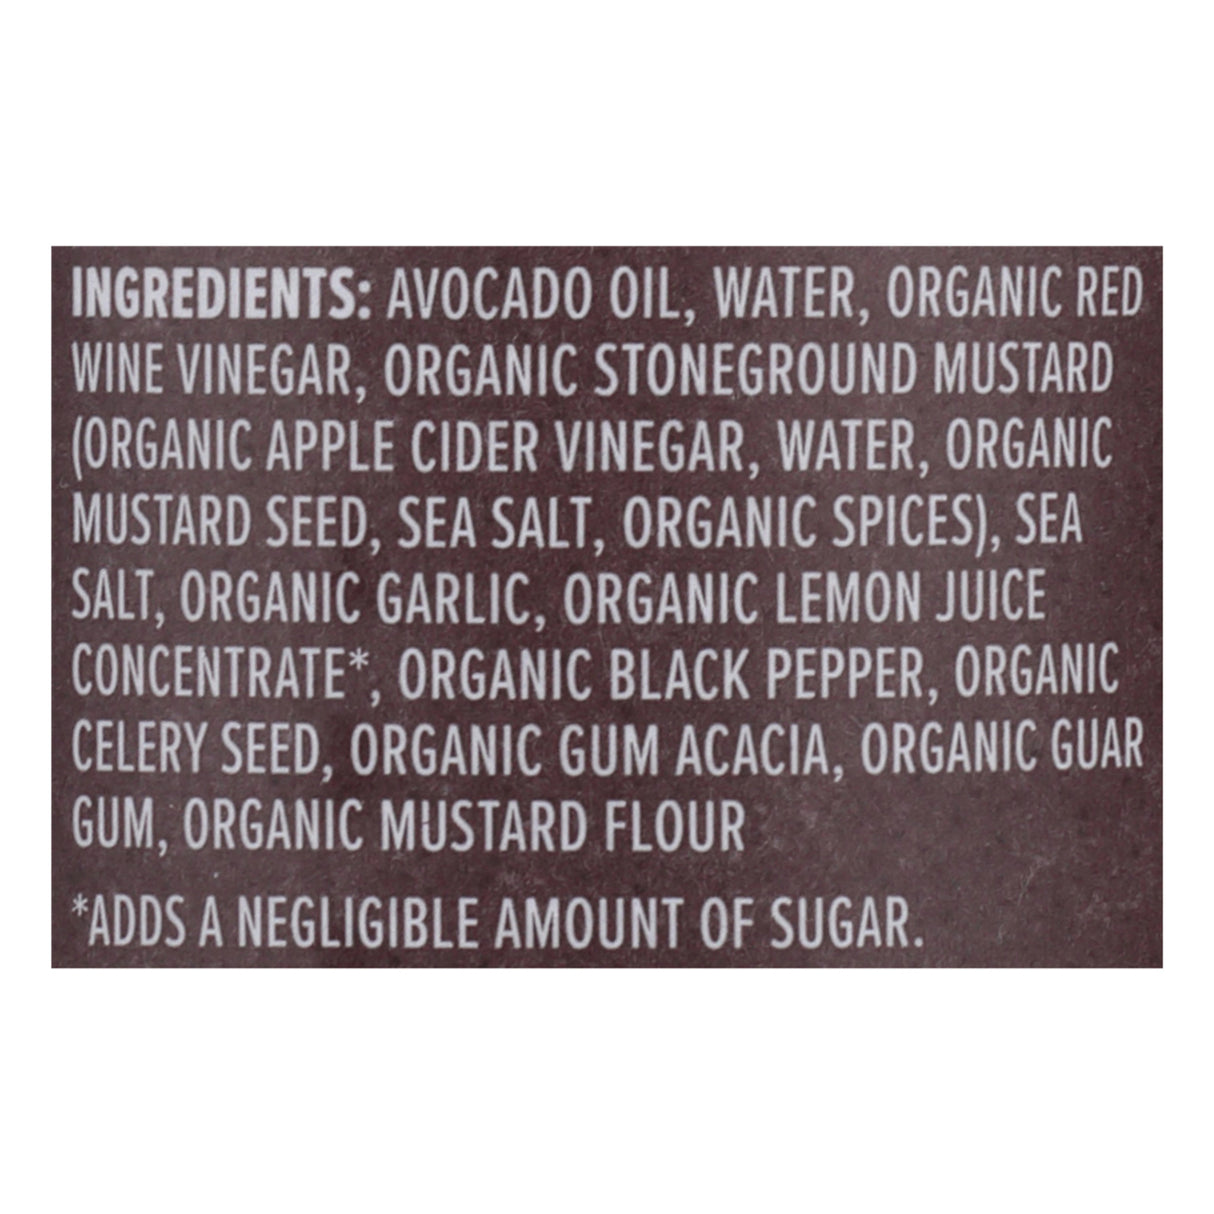 Avocado Oil & Vinegar Vinaigrette, 6 - 8 Fl. Oz. Bottles by Primal Kitchen - Cozy Farm 